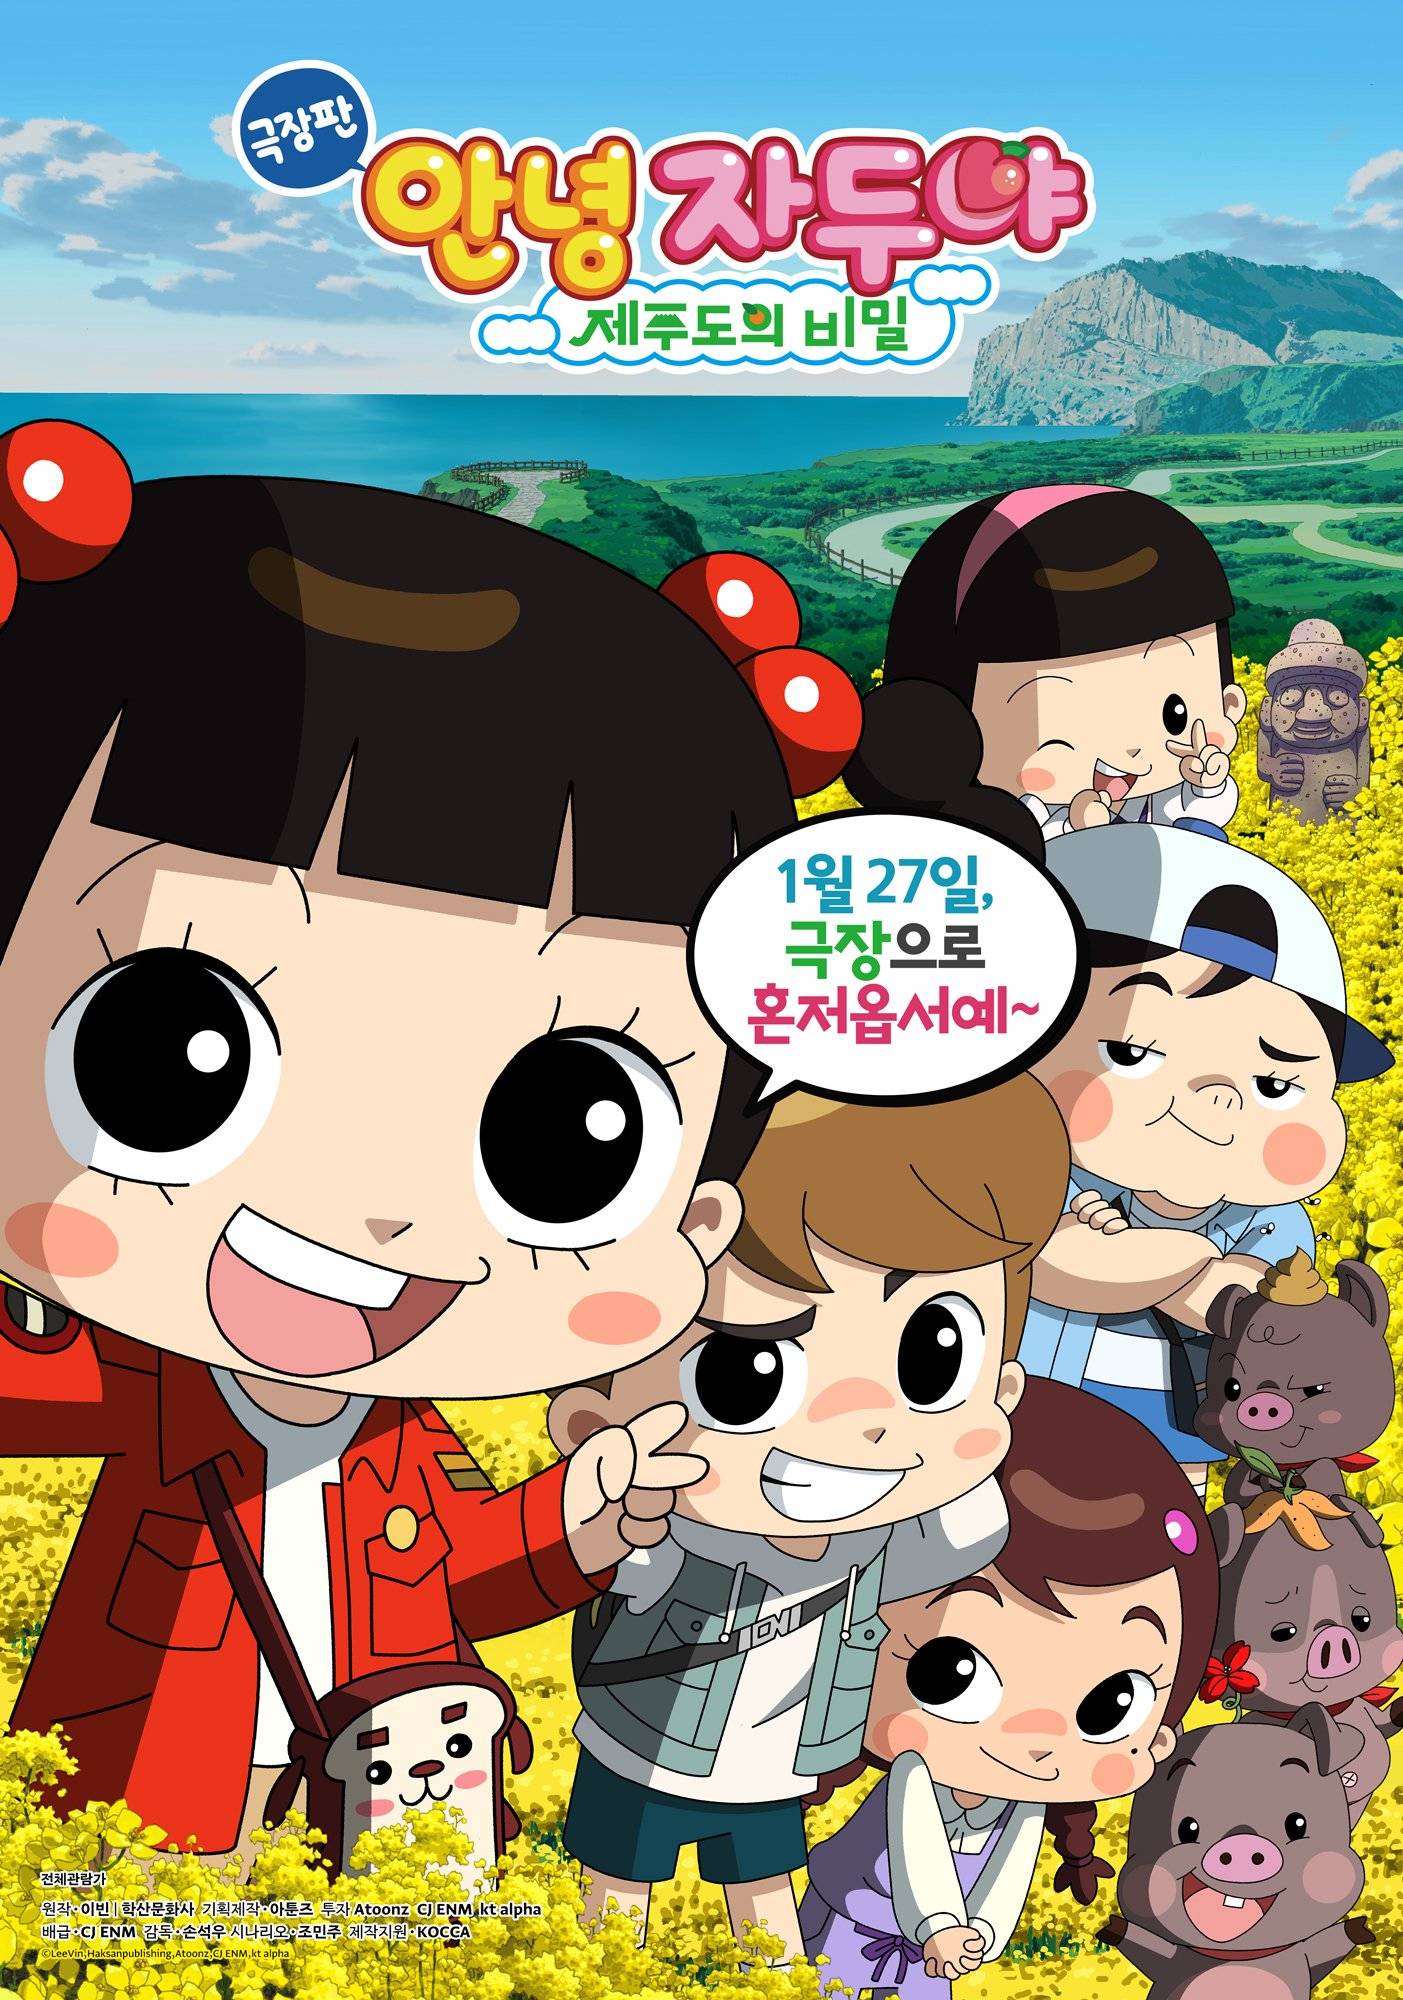 Photo] New Poster Added for the Upcoming Korean Animated Movie 'Hello Jadoo  : The Secret of Jeju Island' @ HanCinema